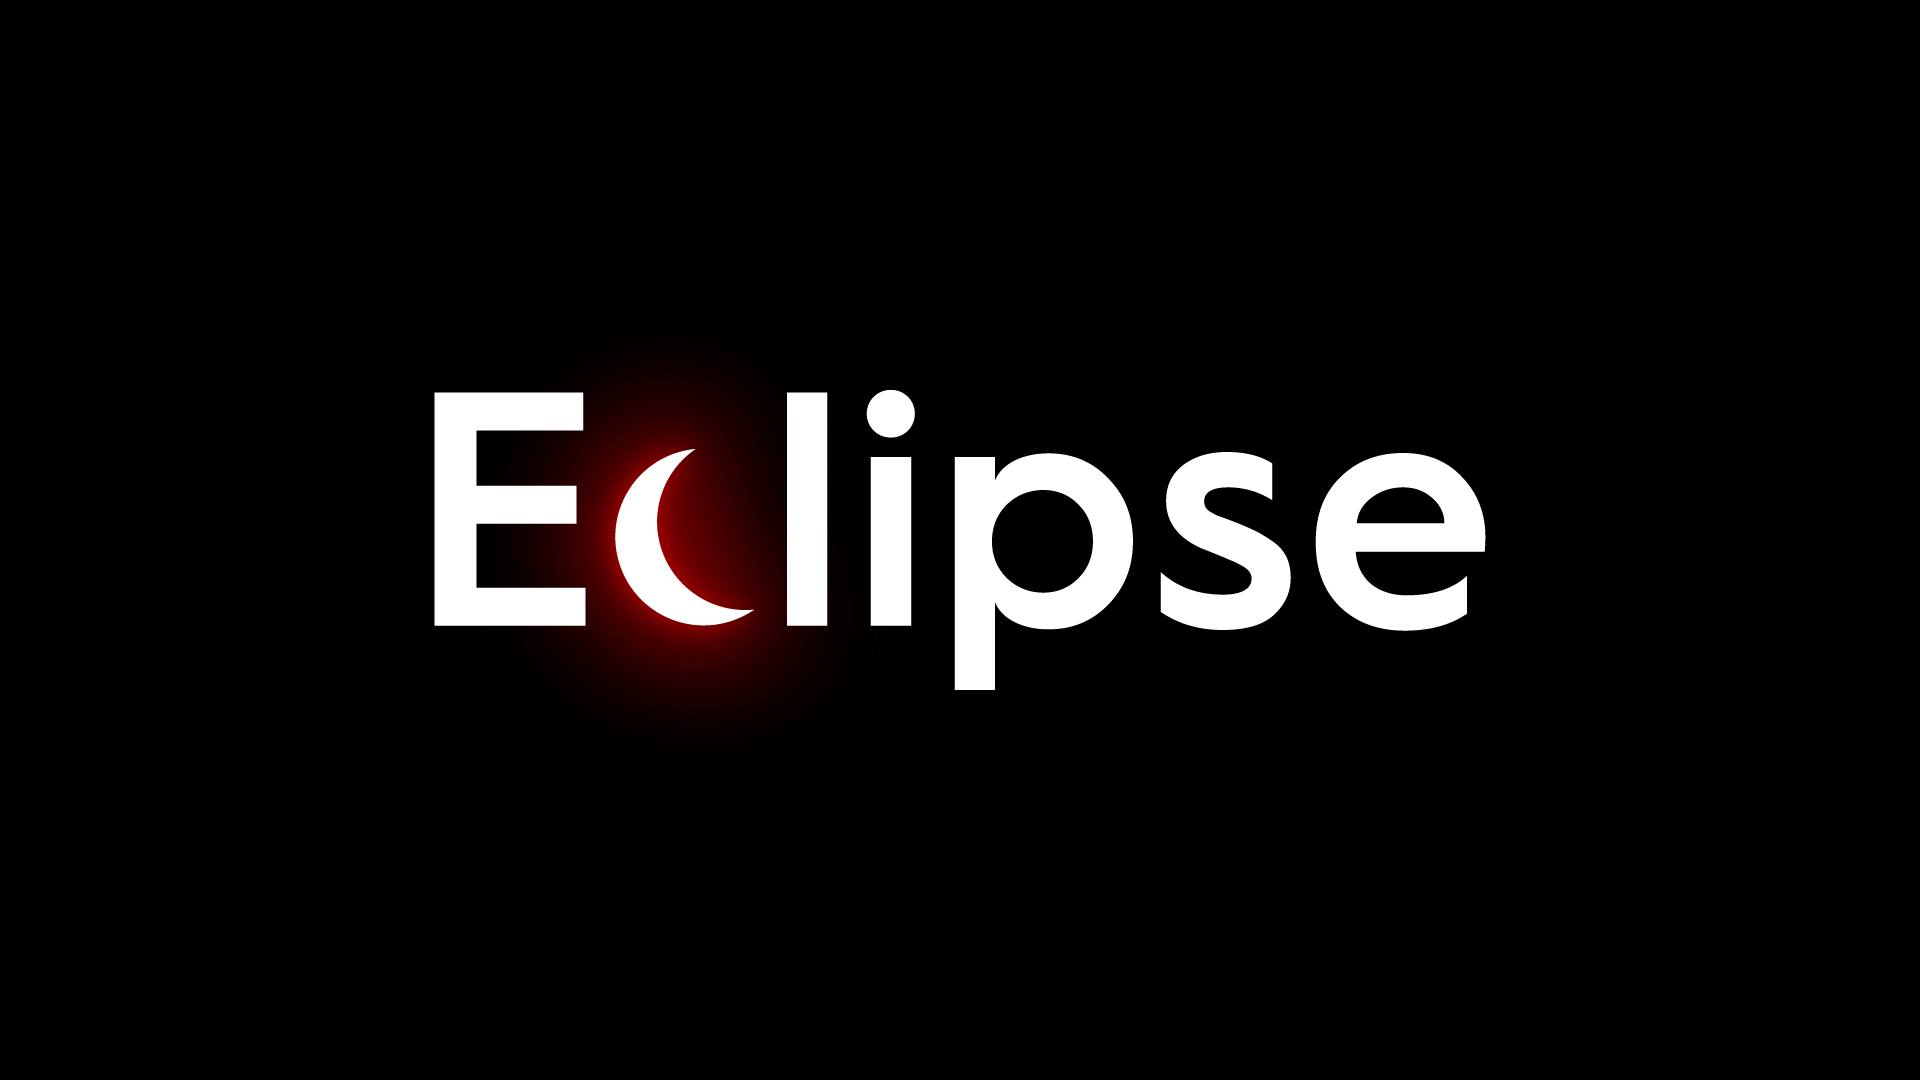 Solar Eclipse Logo - Eclipse logo with the letter c designed as a partial solar eclipse